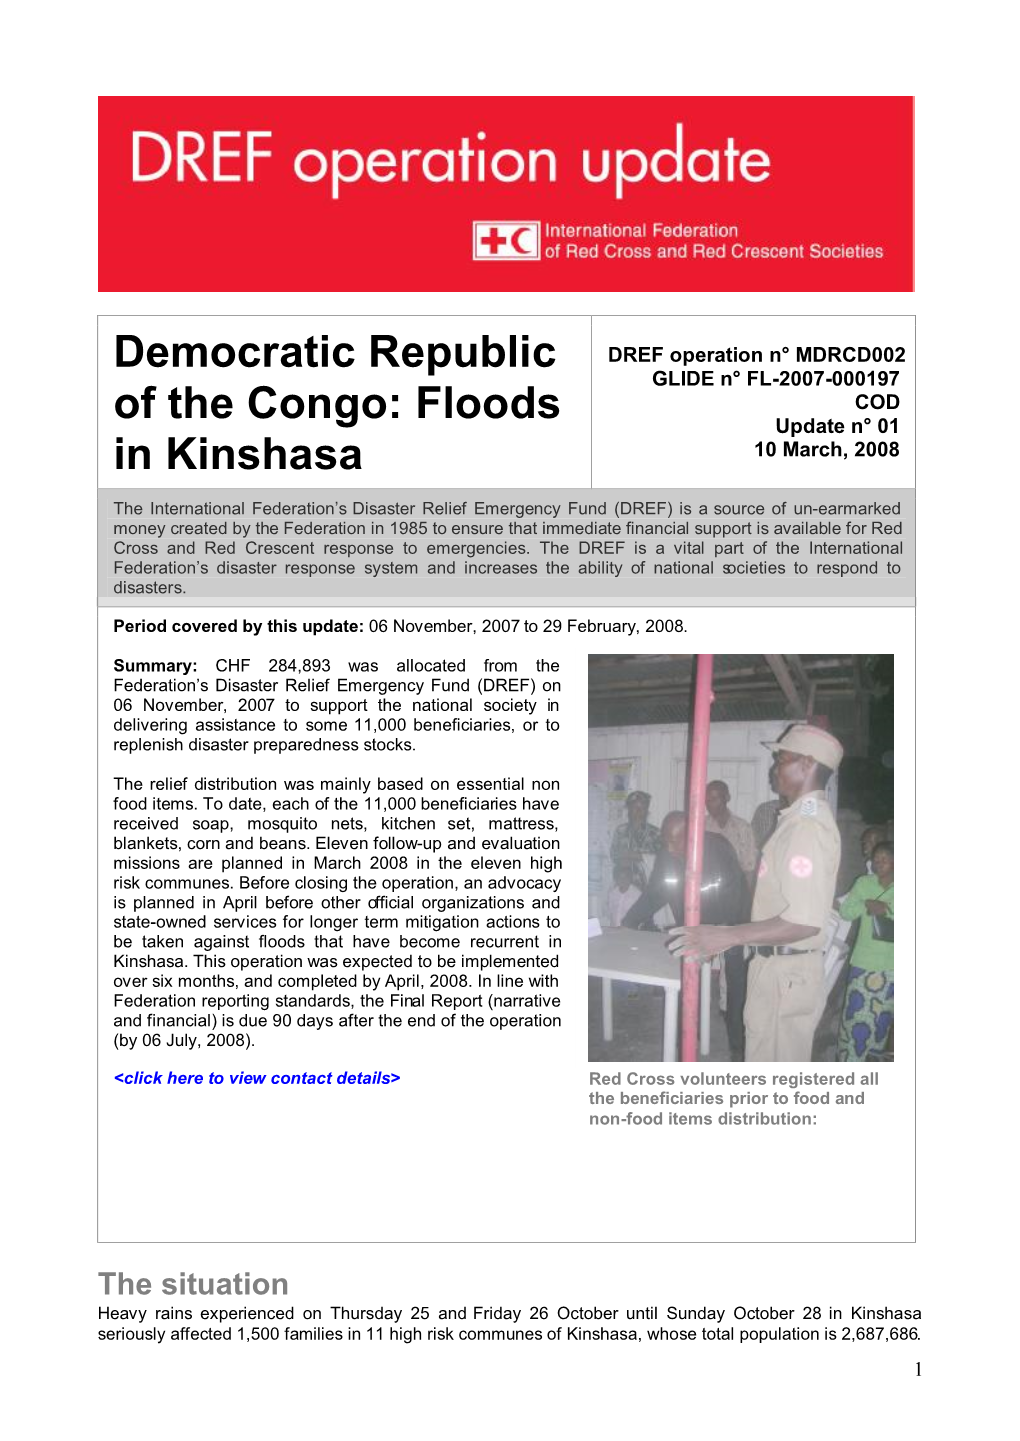 Floods in Kinshasa